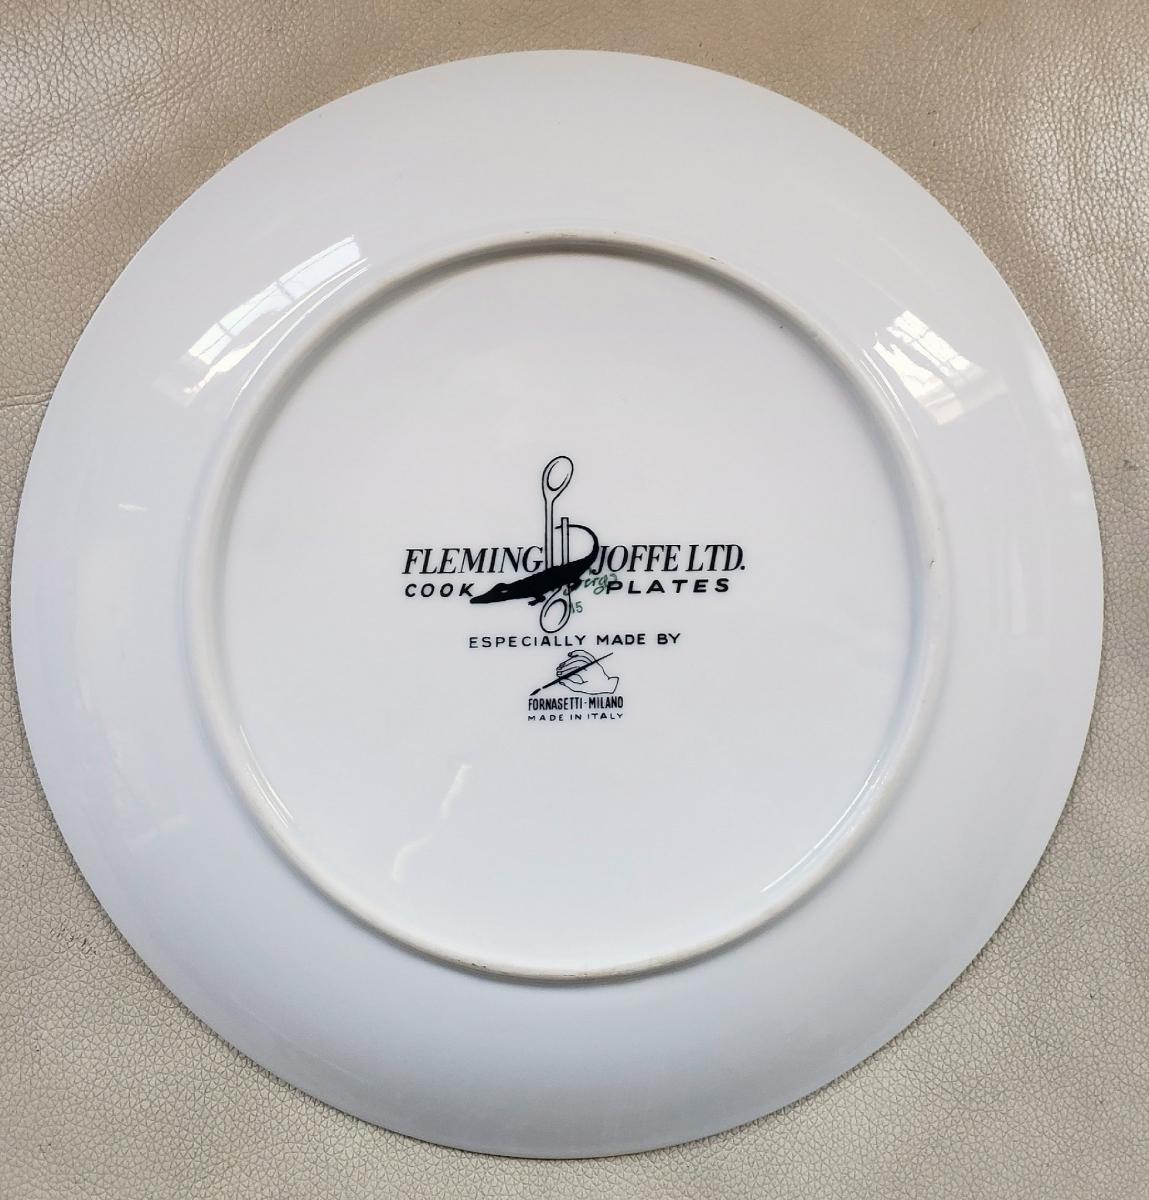 Piero Fornasetti Fleming Joffe Porcelain Recipe Plate, Elephant Ear Soup, 1960s